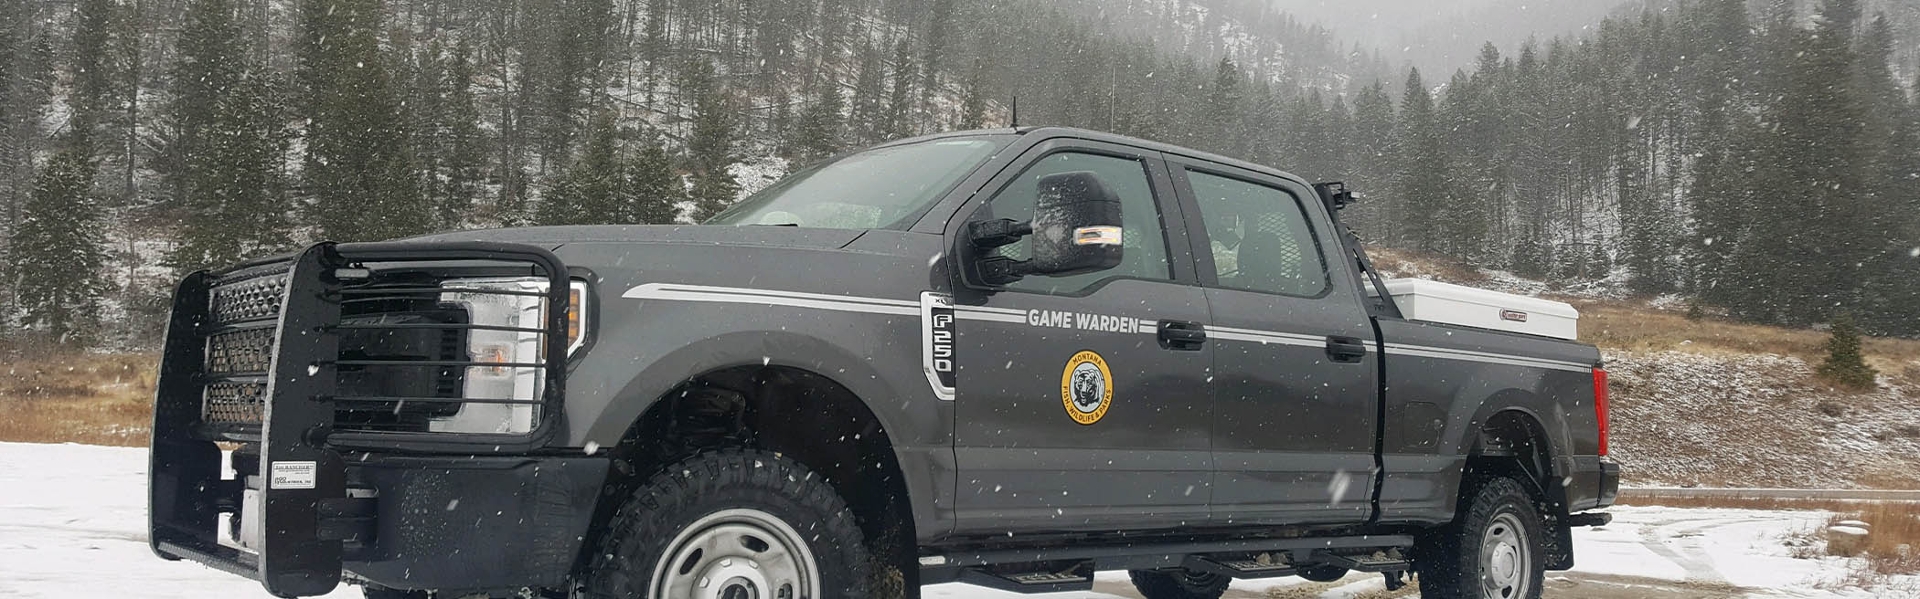 FWP Game Warden truck on a snowy hillside